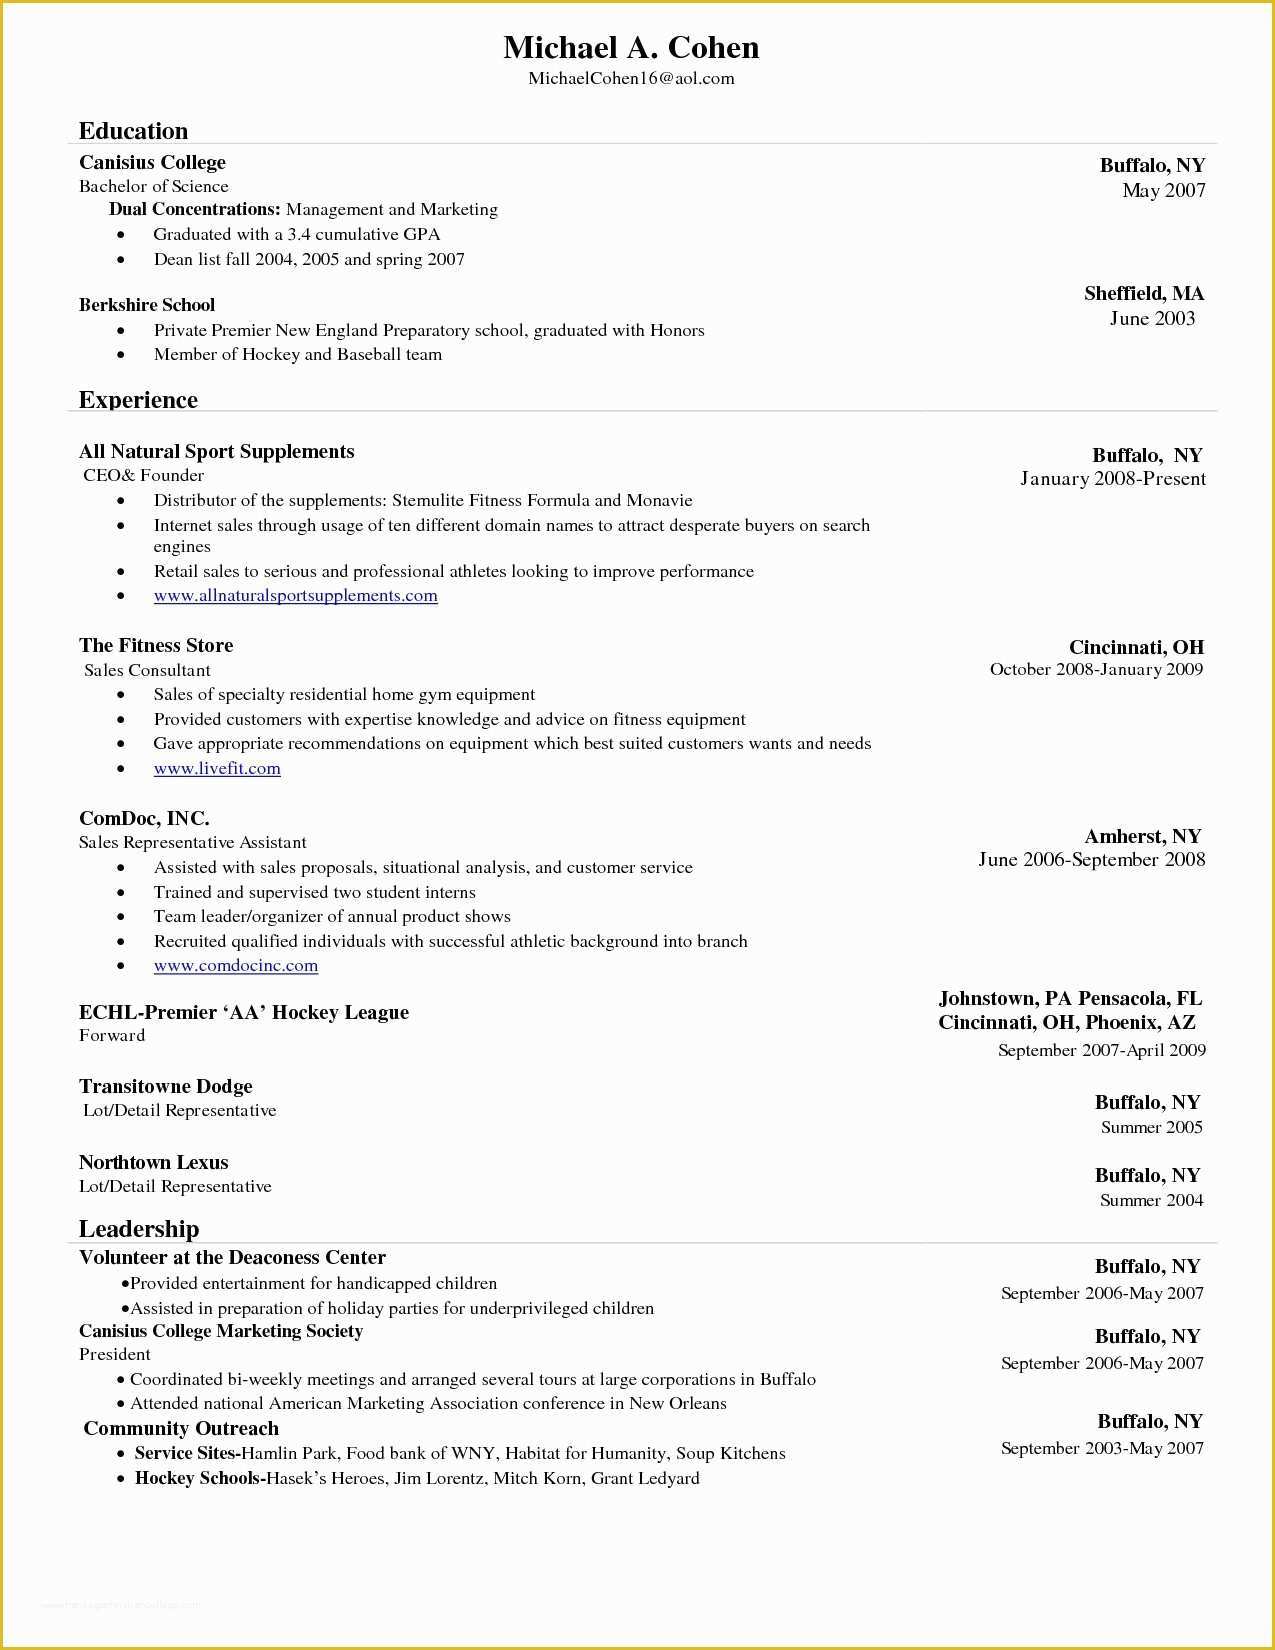 Free Creative Resume Templates Microsoft Word Of 41 Last Creative Resume Templates Free Download for